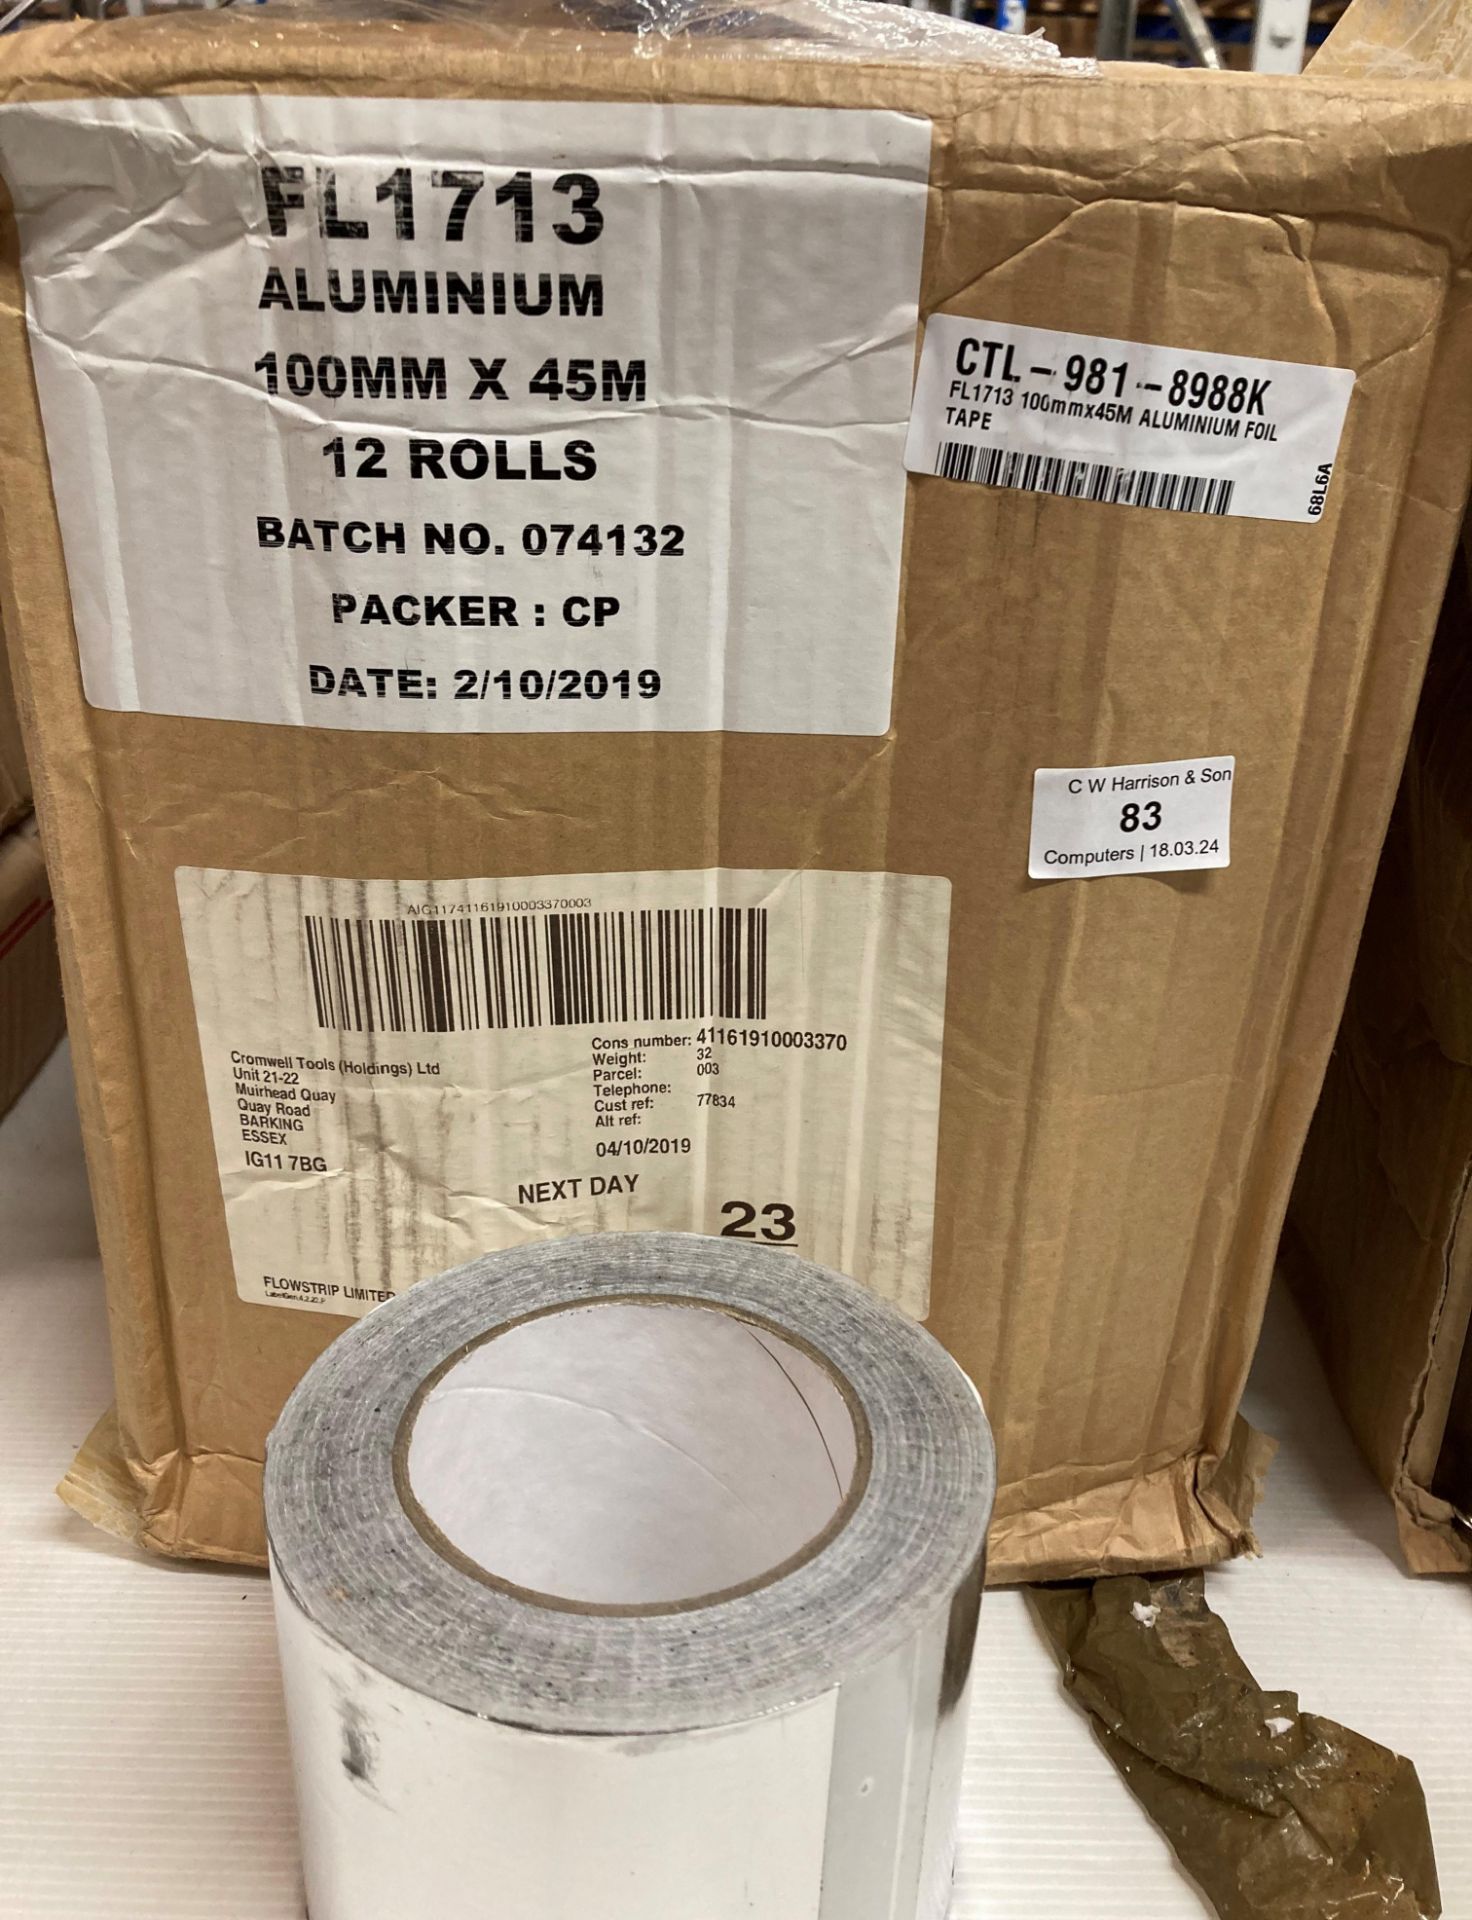 3 x boxes of 12 x rolls of 30 MICRON aluminium foil (10cm x 4.